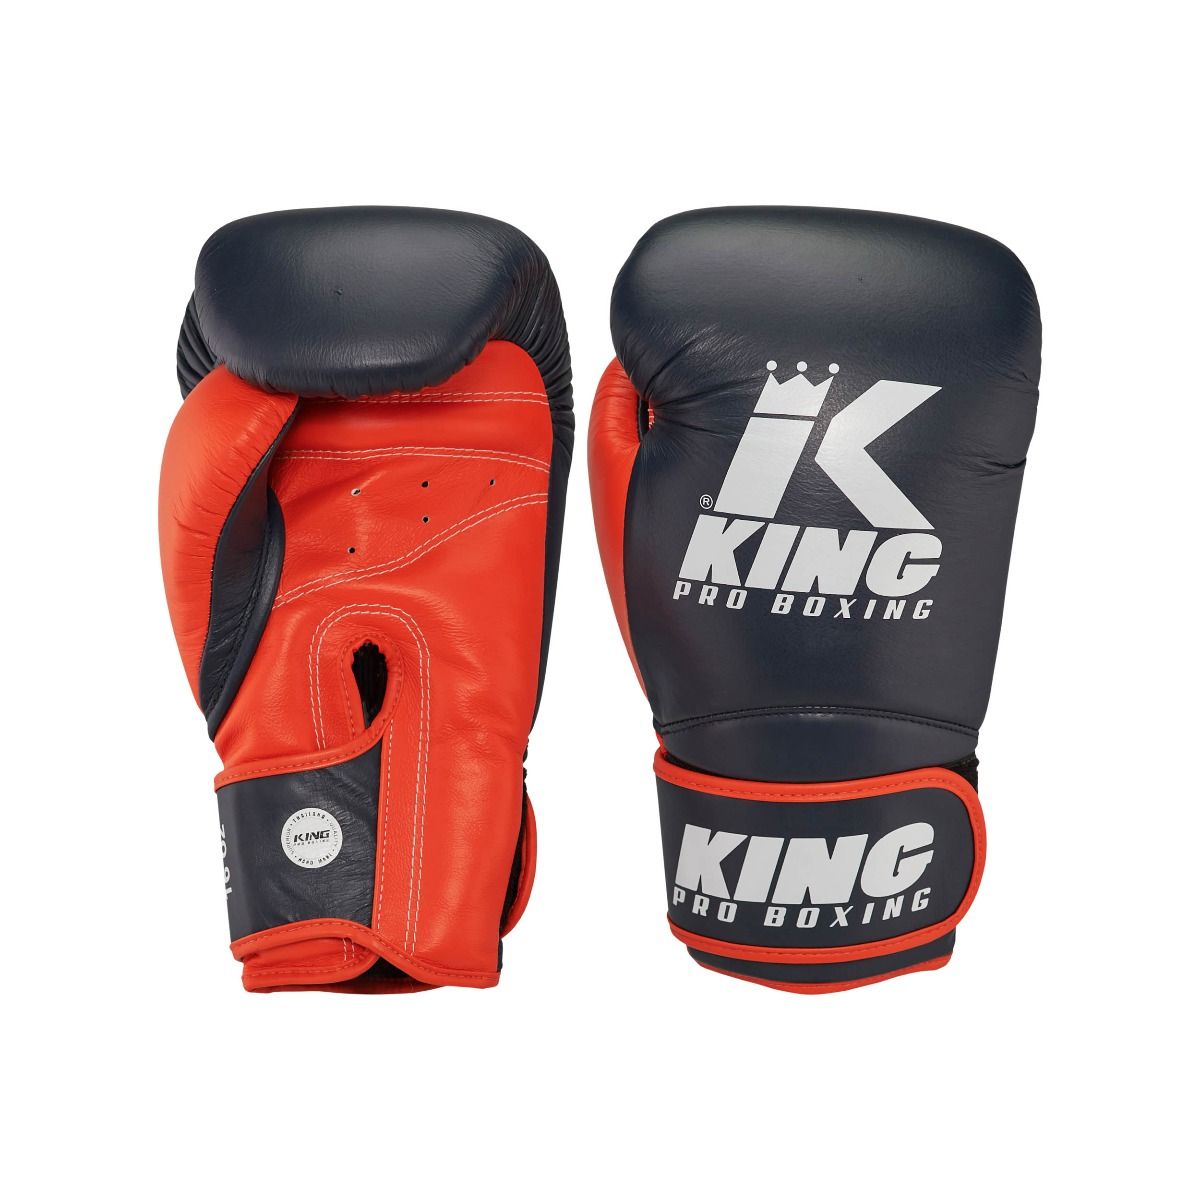 King Pro Boxing STAR MESH 7 donkerblauwe bokshandschoenen